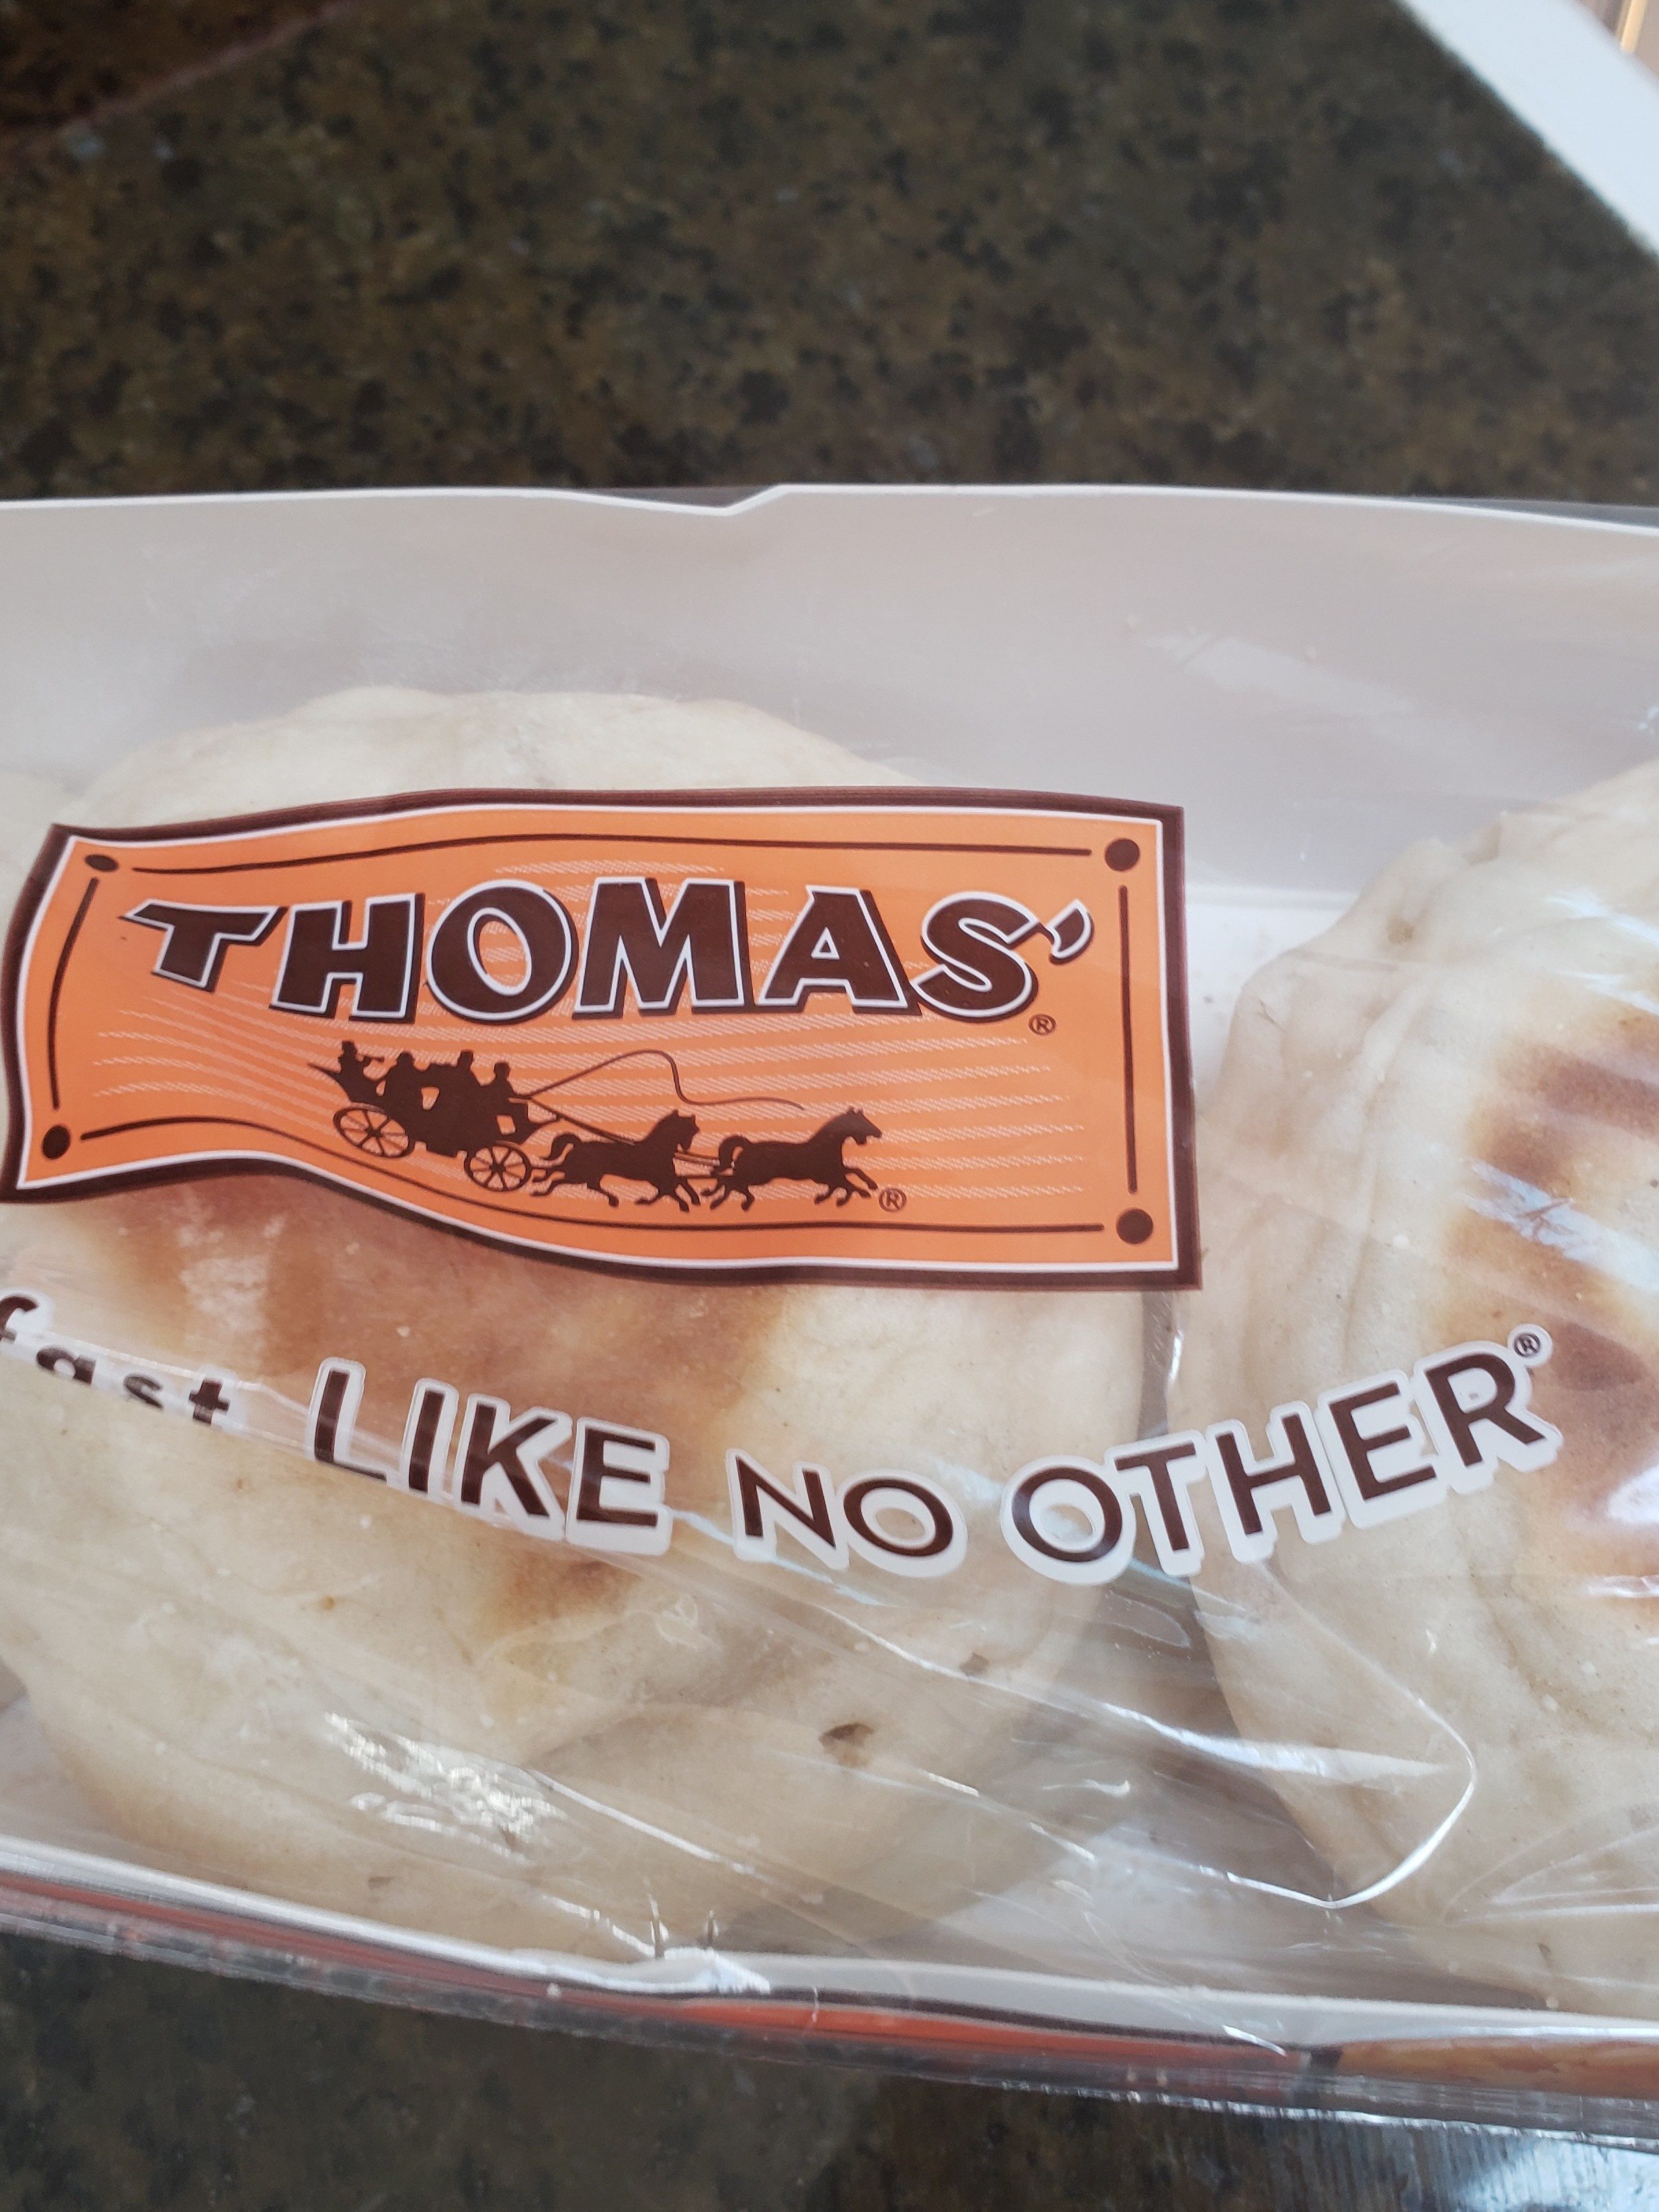 Thomas original english muffins - Producto - en